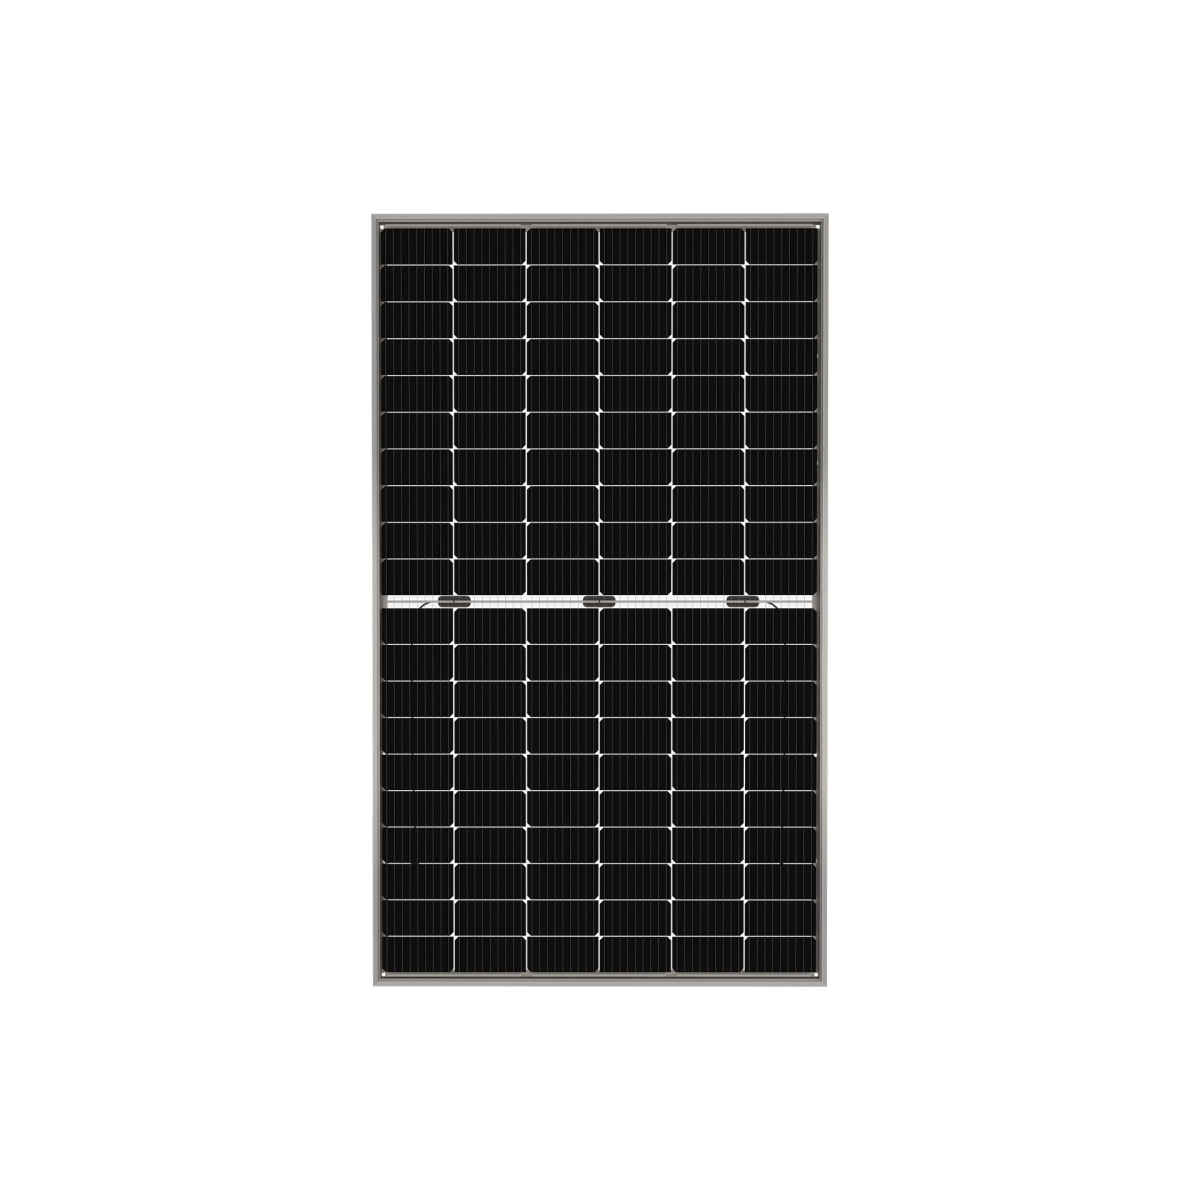 TommaTech 380 Watt 120 Percmono Bifacial Half-Cut Multi Busbar Solar Panel